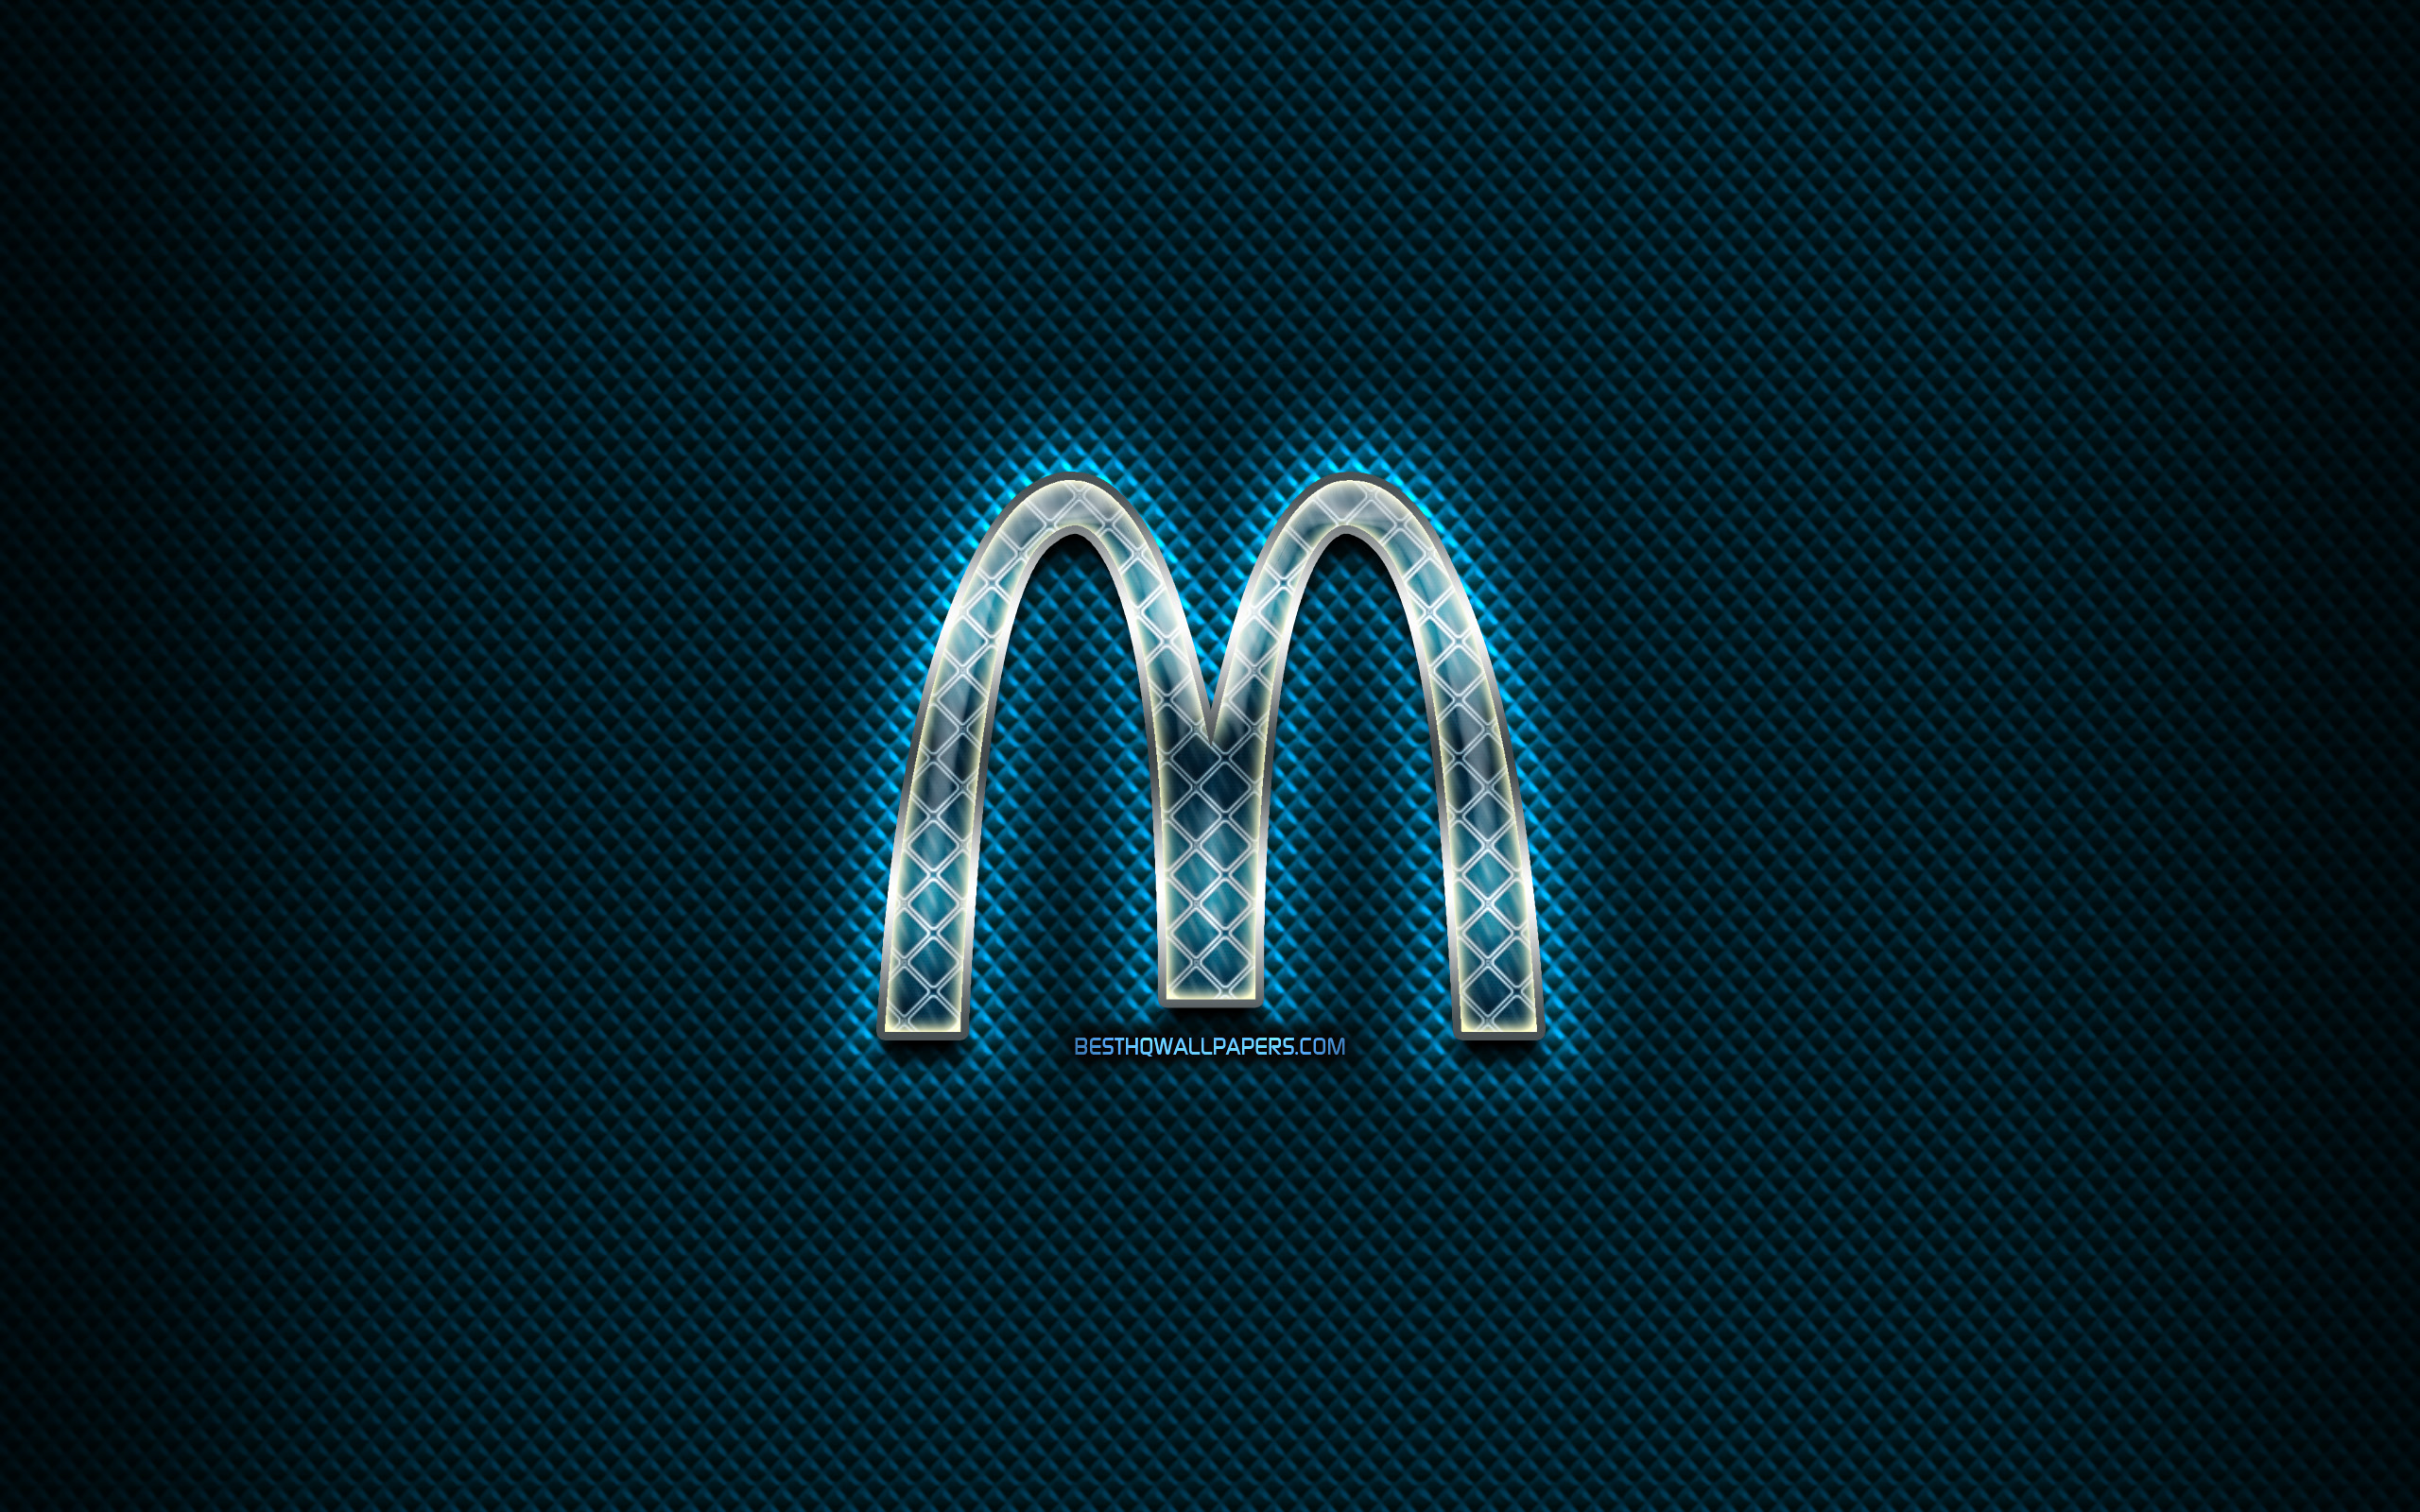 Download wallpaper McDonalds glass logo, blue background, artwork, McDonalds, brands, McDonalds rhombic logo, creative, McDonalds logo for desktop with resolution 2560x1600. High Quality HD picture wallpaper